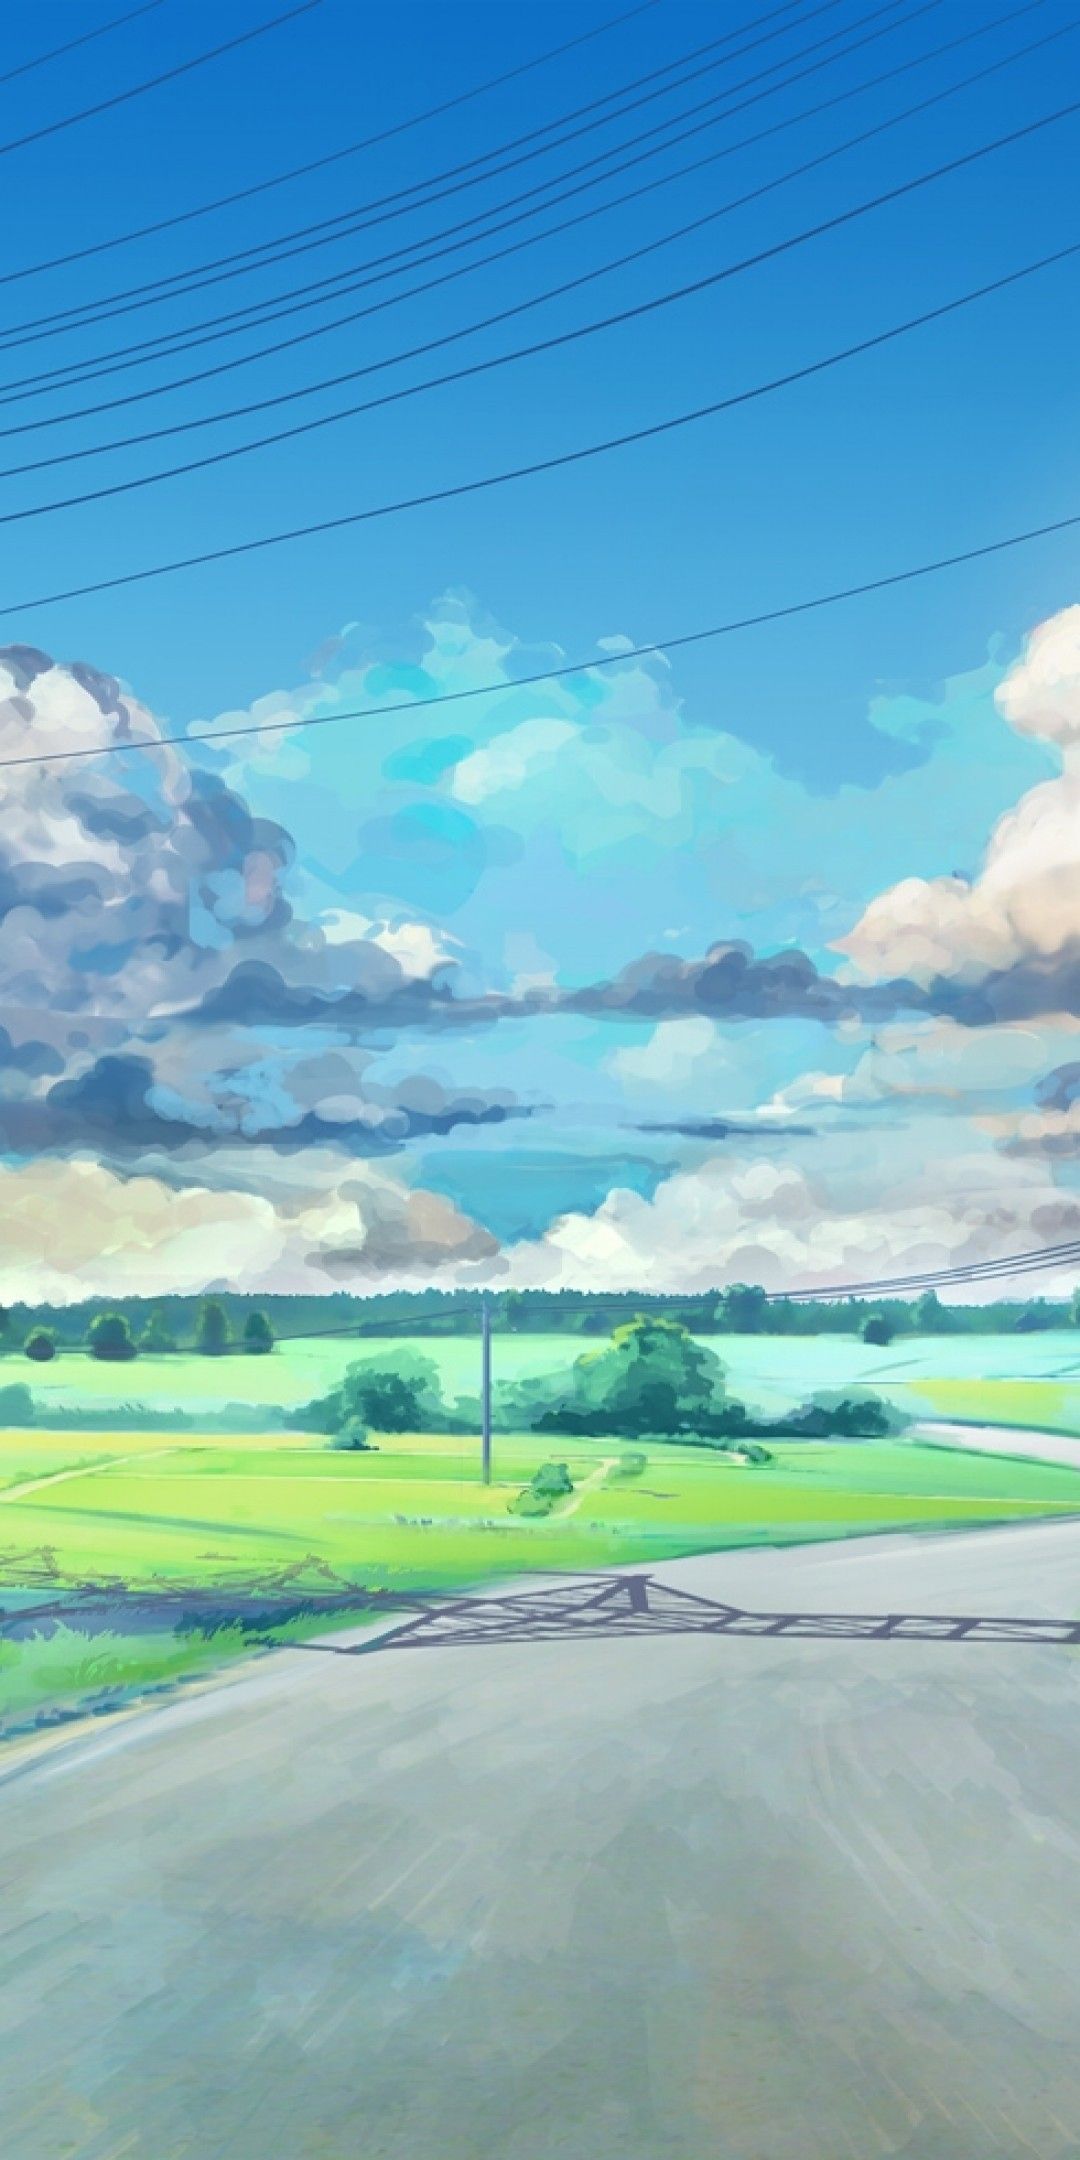 Anime Summer Landscape Wallpapers - Wallpaper Cave